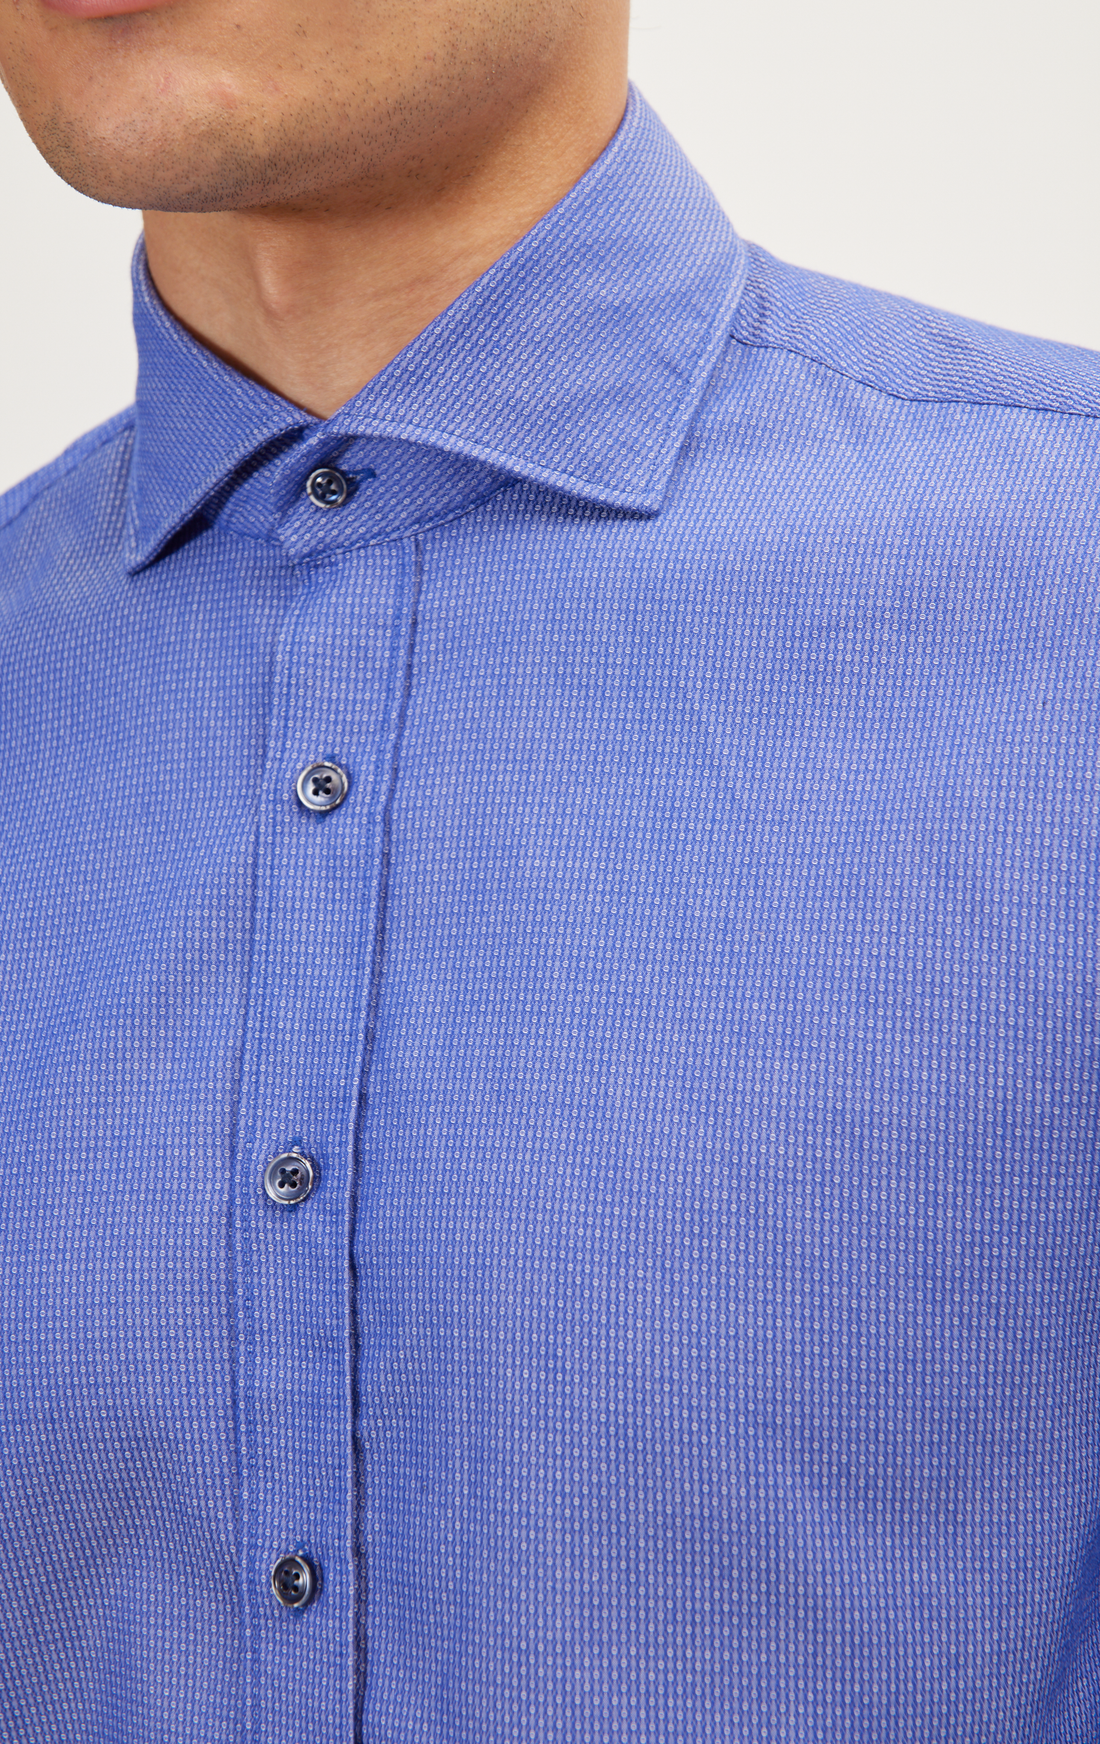 N° 4806 JACQUARD COTTON TONAL BUTTON DRESS SHIRT - DARK BLUE